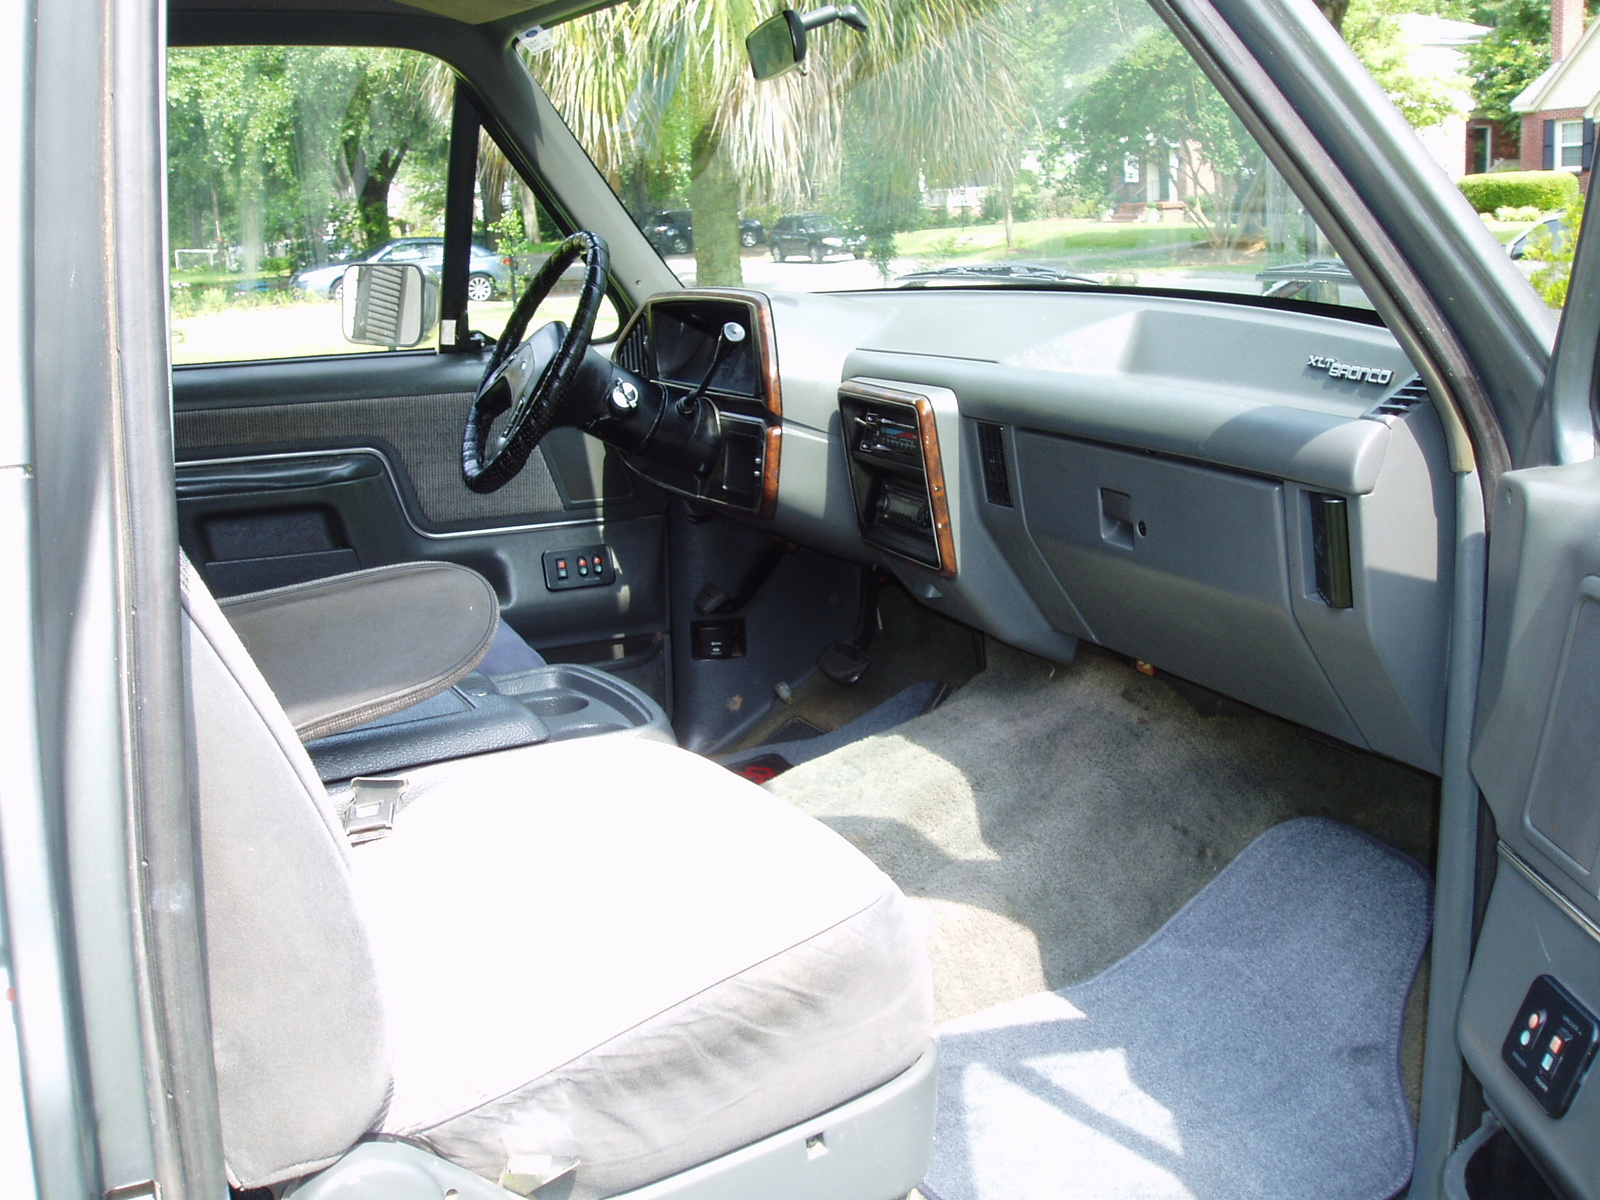 1990 Ford bronco ii interior #2